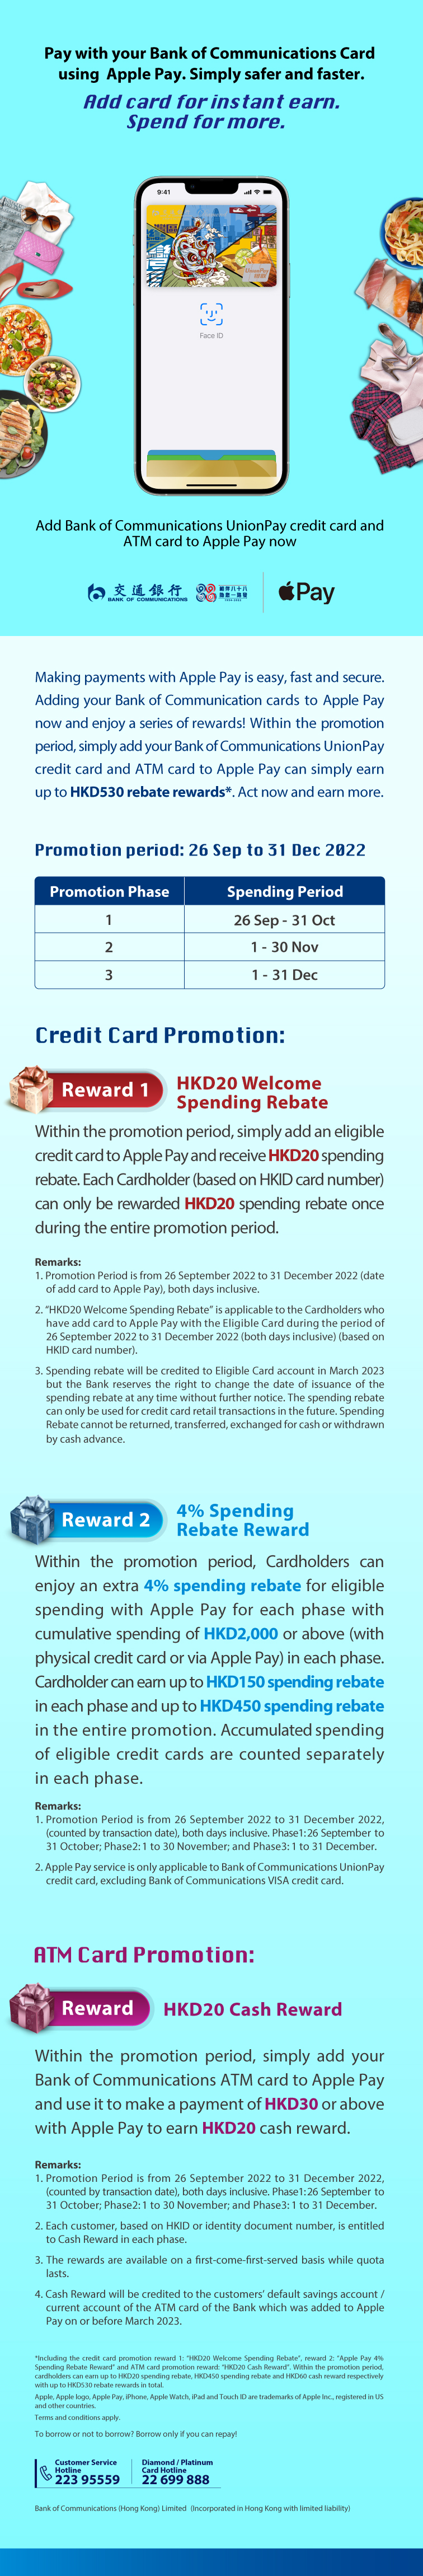 bank of communications credit card “apple pay reward program”